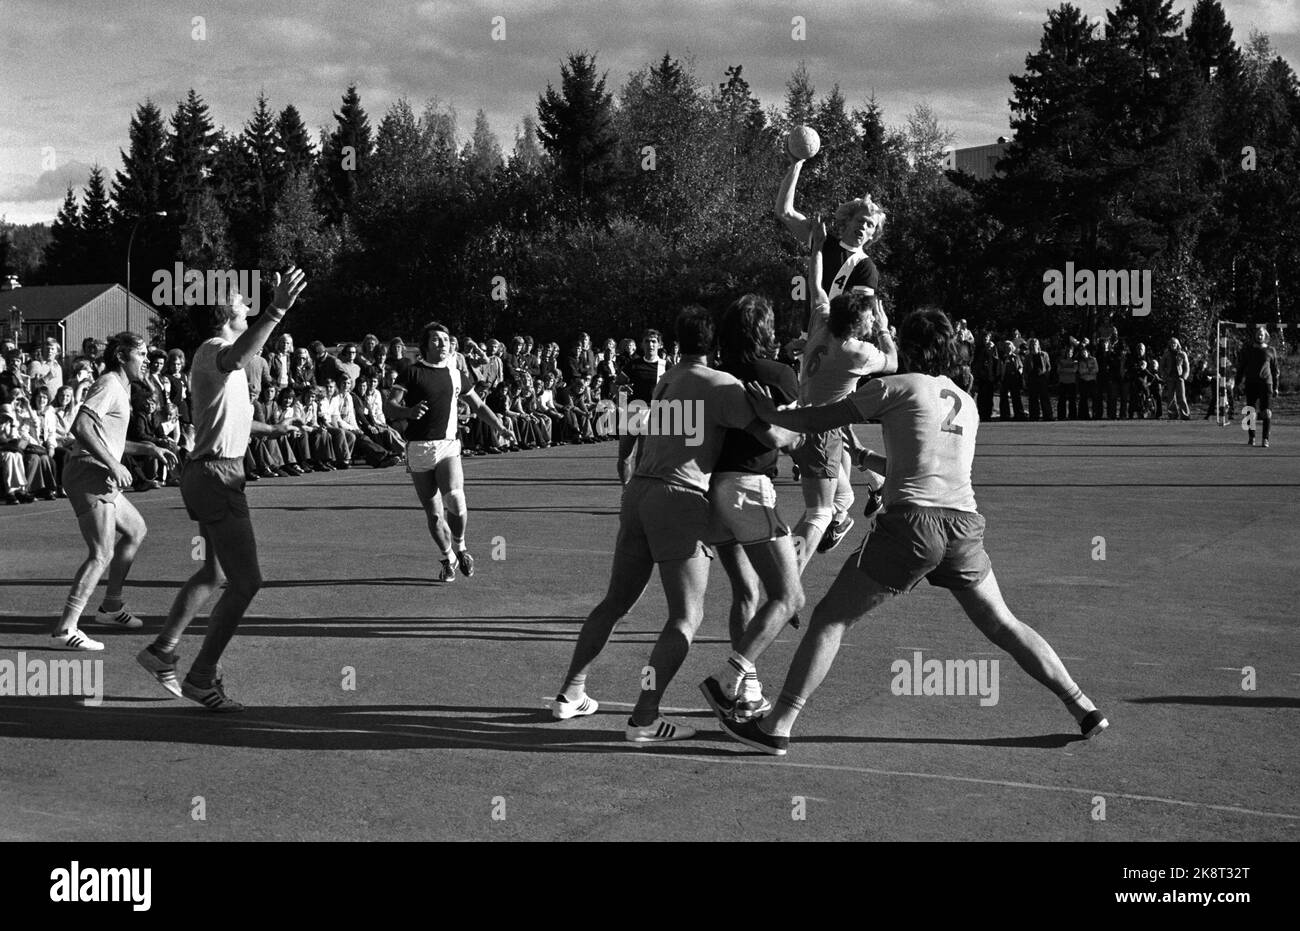 Oslo 19730909. FINALE NM en handball, en plein air. Oppsal - Bäckelaget (23-14). N° 4 d'Oppsal avec une seule prise de vue. Photo: NTB Banque D'Images